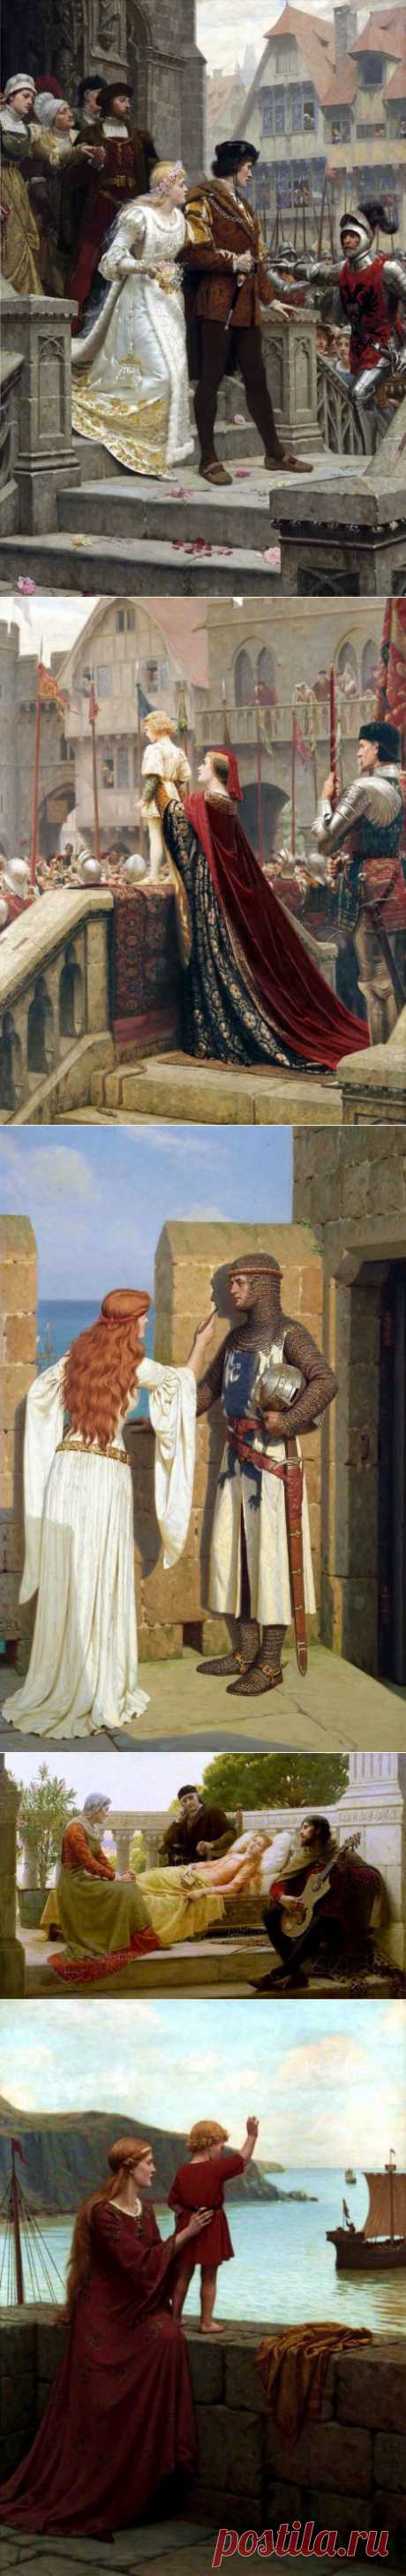 Английский художник Edmund Blair Leighton. История рыцарства.